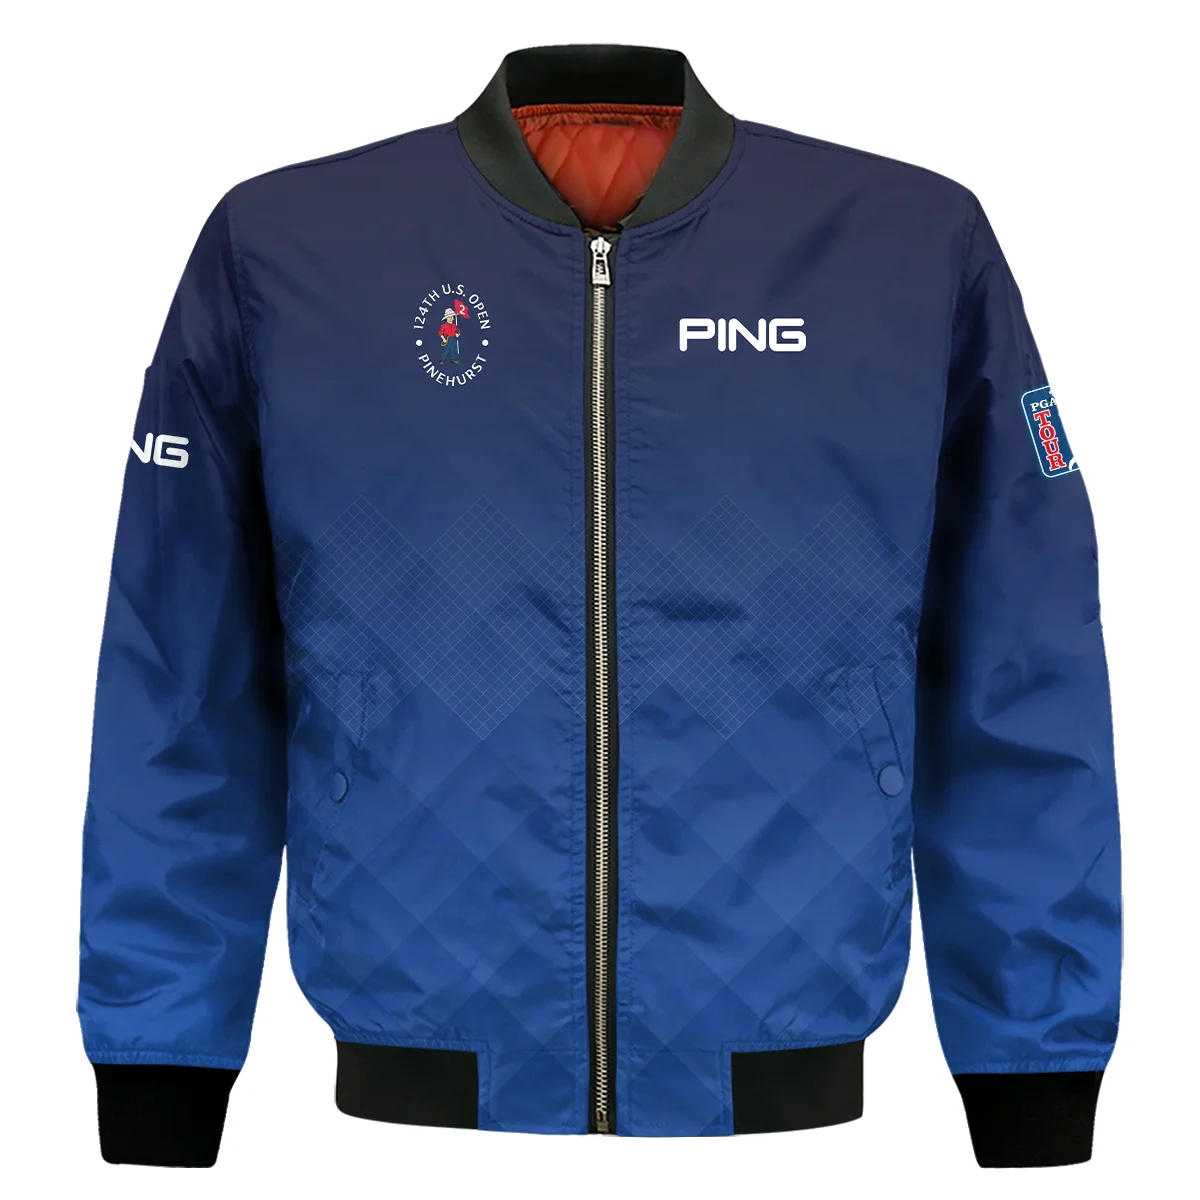 124th U.S. Open Pinehurst Ping Dark Blue Gradient Stripes Pattern Bomber Jacket Style Classic Bomber Jacket